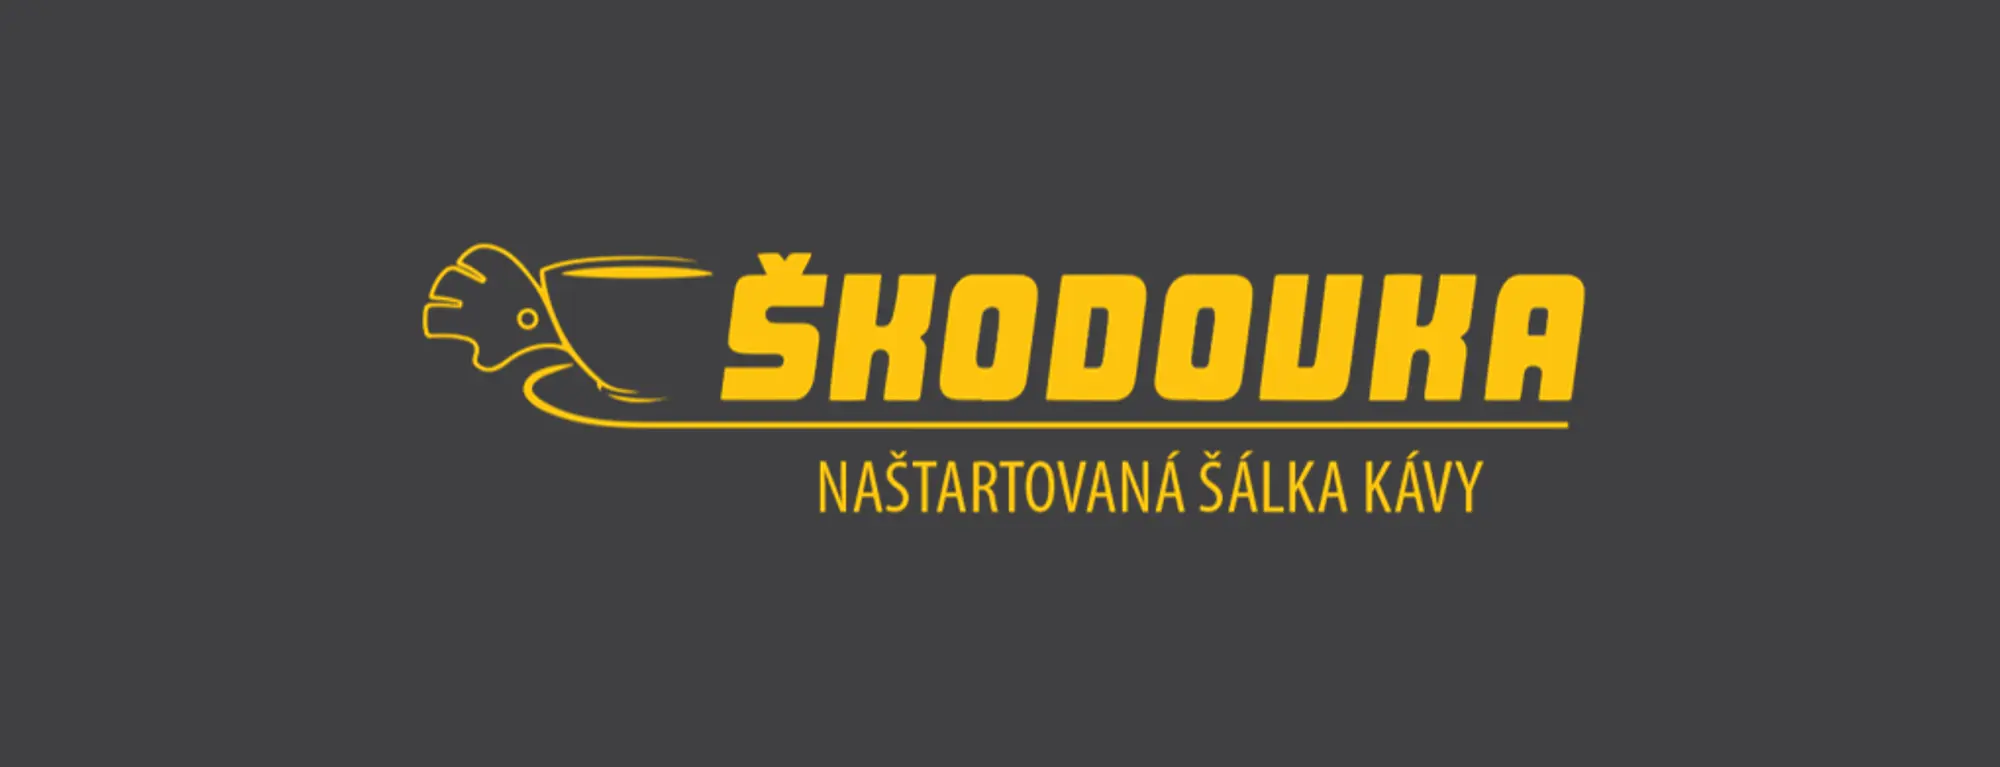 klient-wooacademy-cafe-skodovka-logo (2)